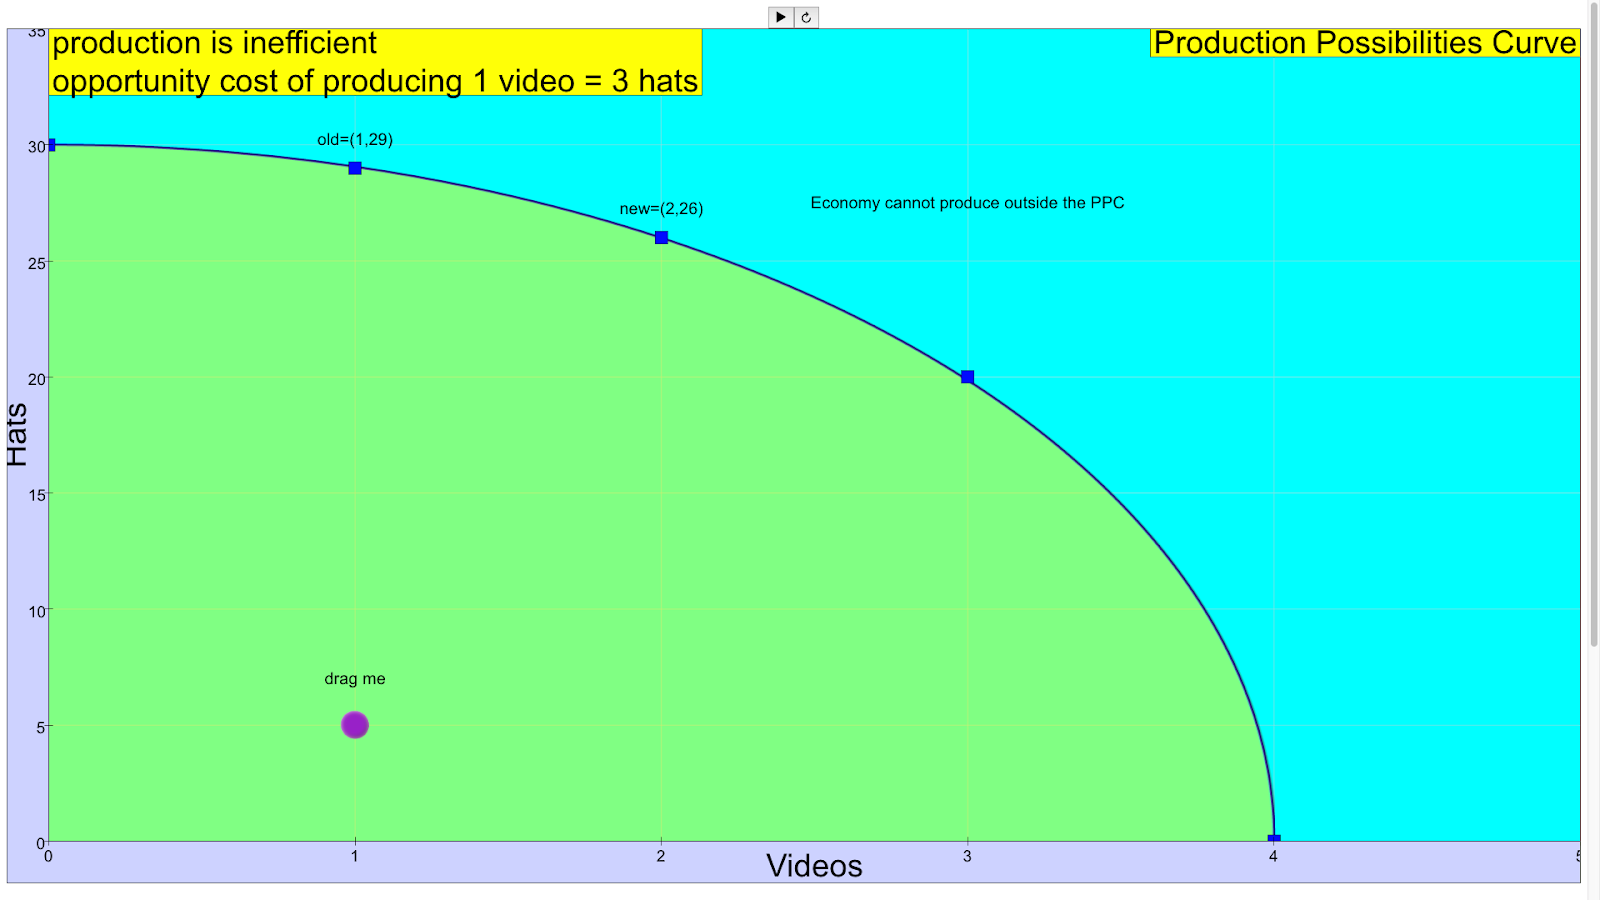 production probability curve